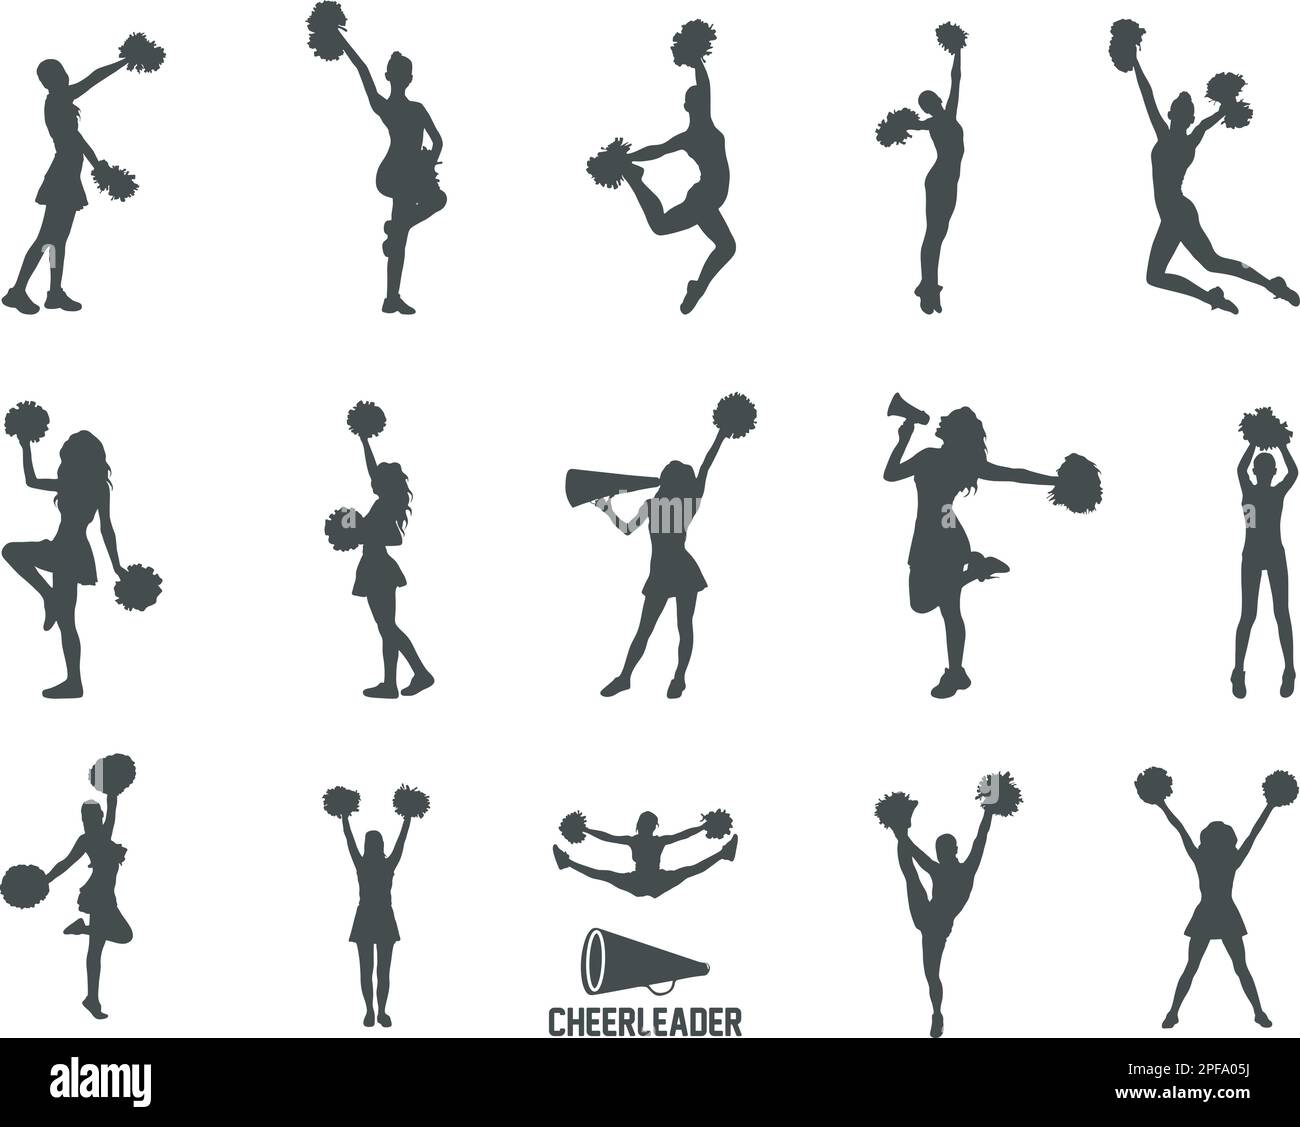 Cheerleader-Silhouette, Cheerleader-SVG-Cut-Dateien, Cheer-SVG, Cheer-Girls-Silhouetten, Cheerleader-Silhouetten, Cheerleader-Girl-Vektor Stock Vektor